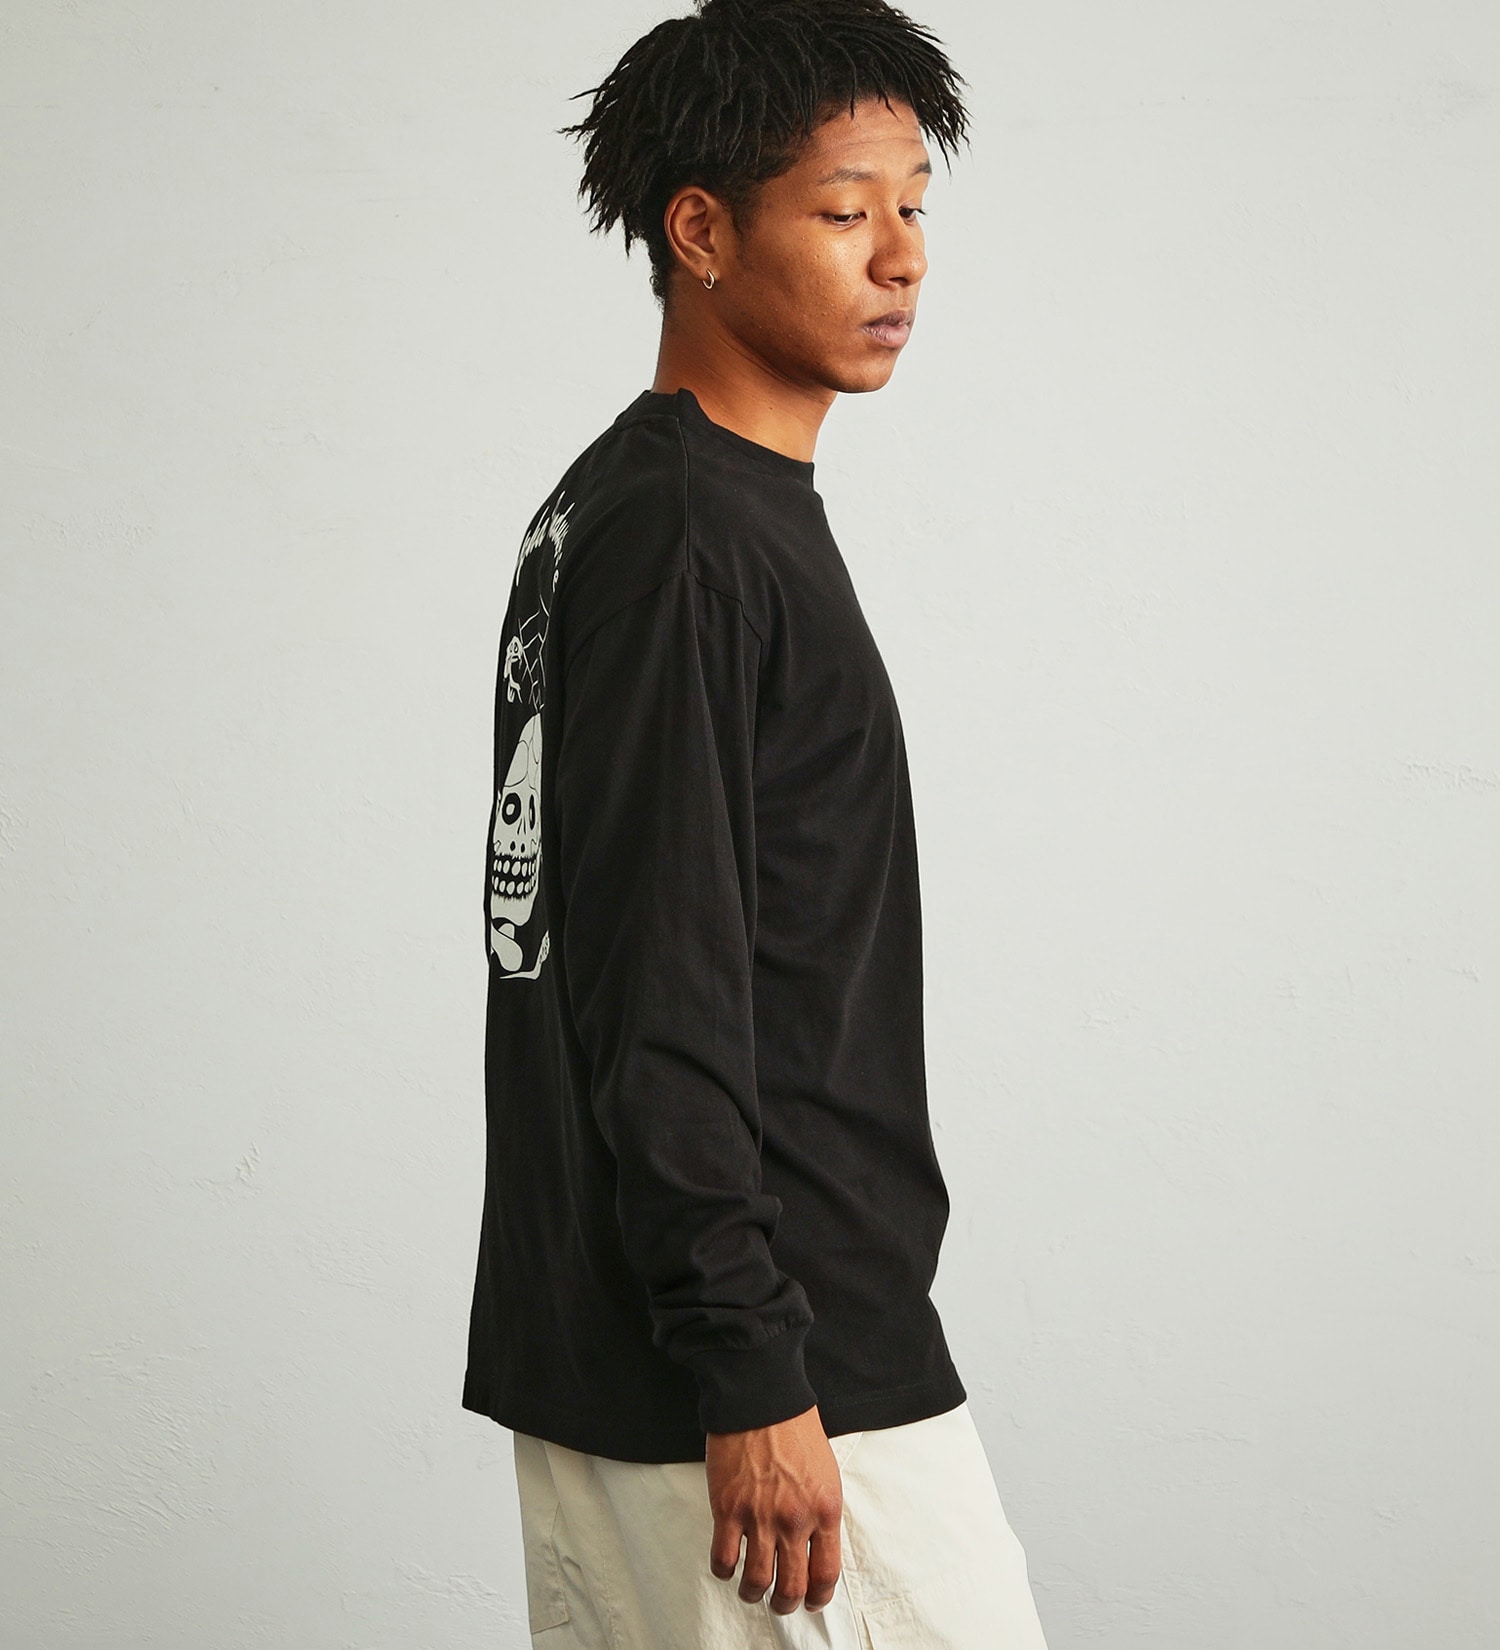 ALPHA(アルファ)のSKULL バックプリント長袖Tシャツ|トップス/Tシャツ/カットソー/メンズ|ブラック